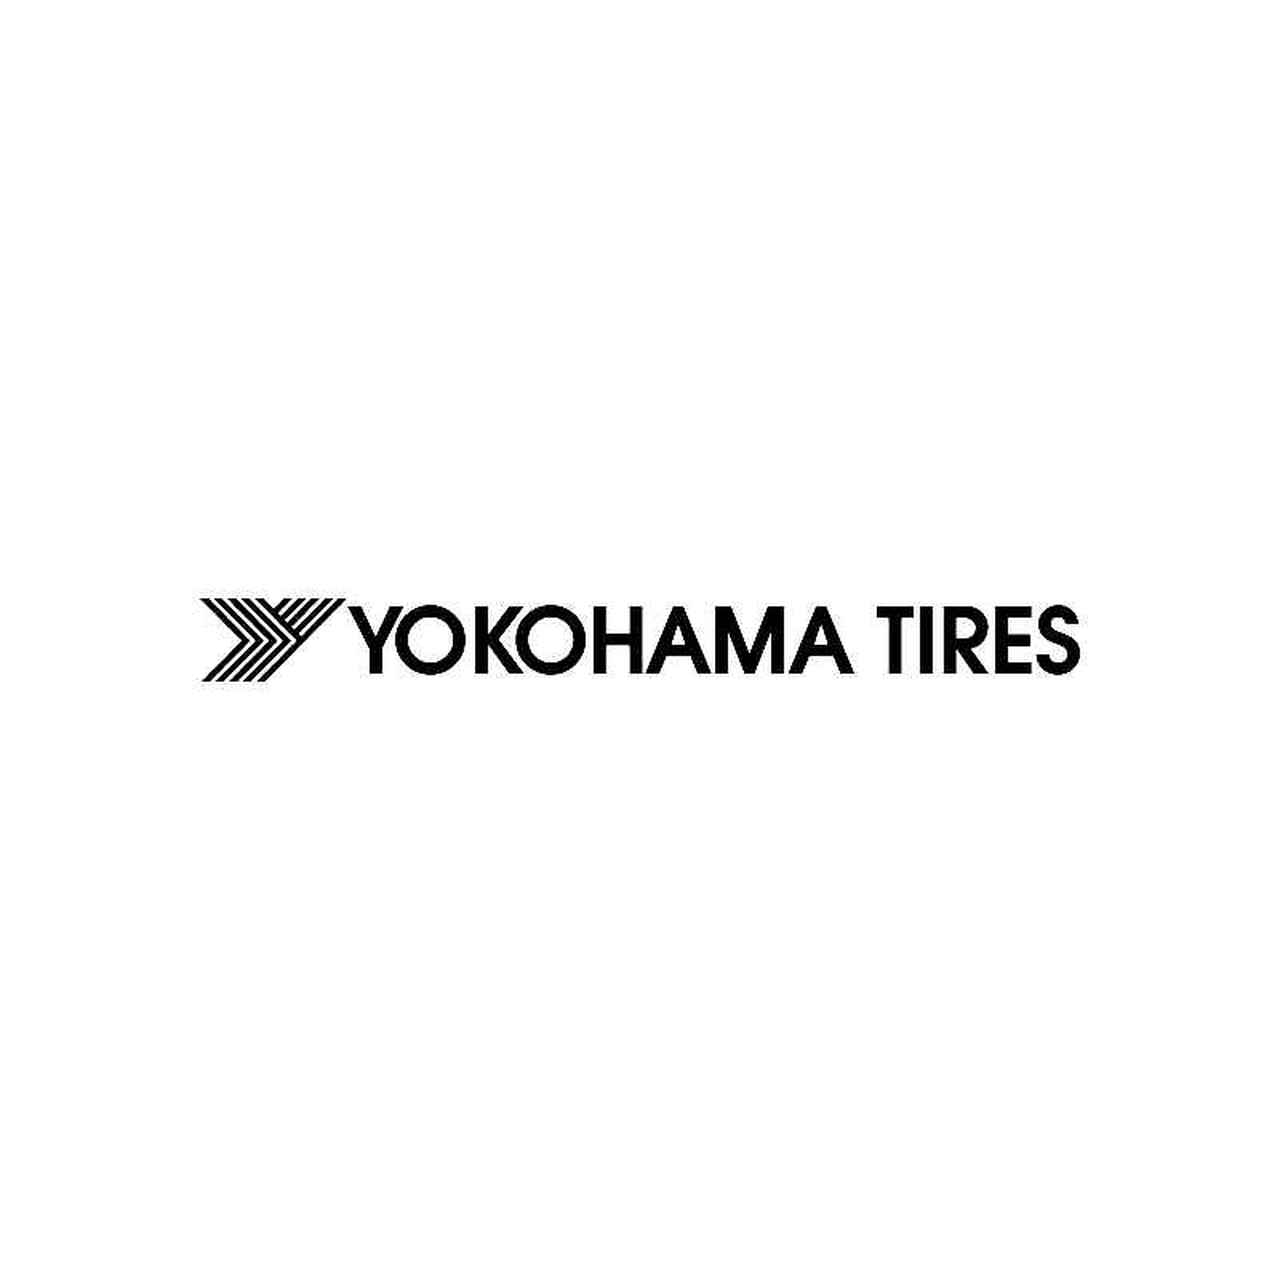 Yokohama Tires Logo Jdm Decal.